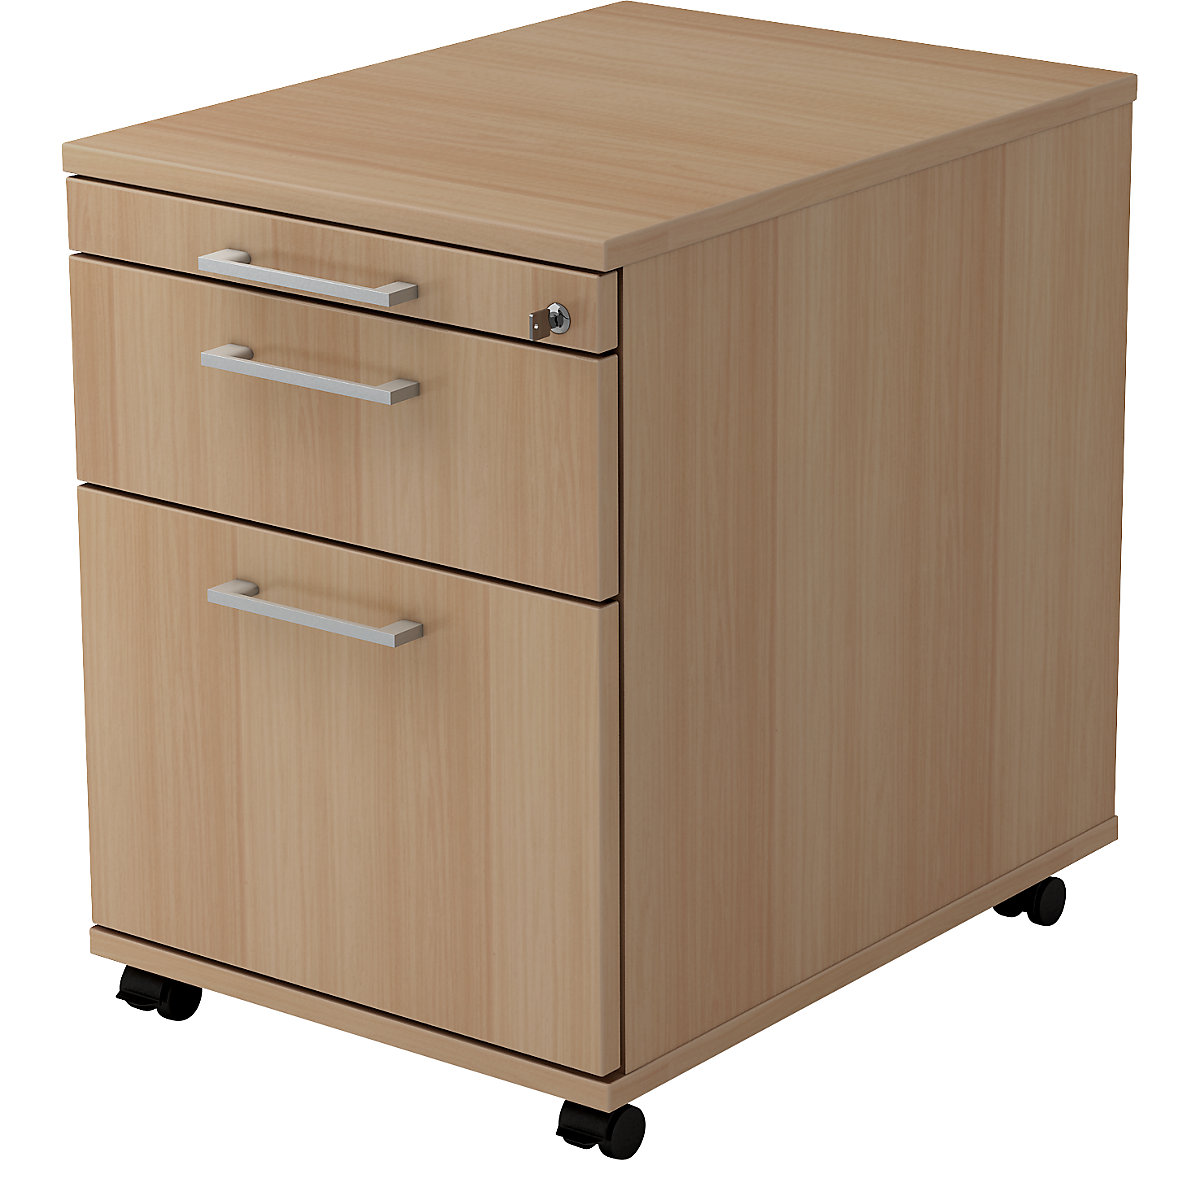 Mobile pedestal – eurokraft pro, 1 utensil drawer, 1 drawer, 1 file suspension drawer, depth 580 mm, walnut finish-15